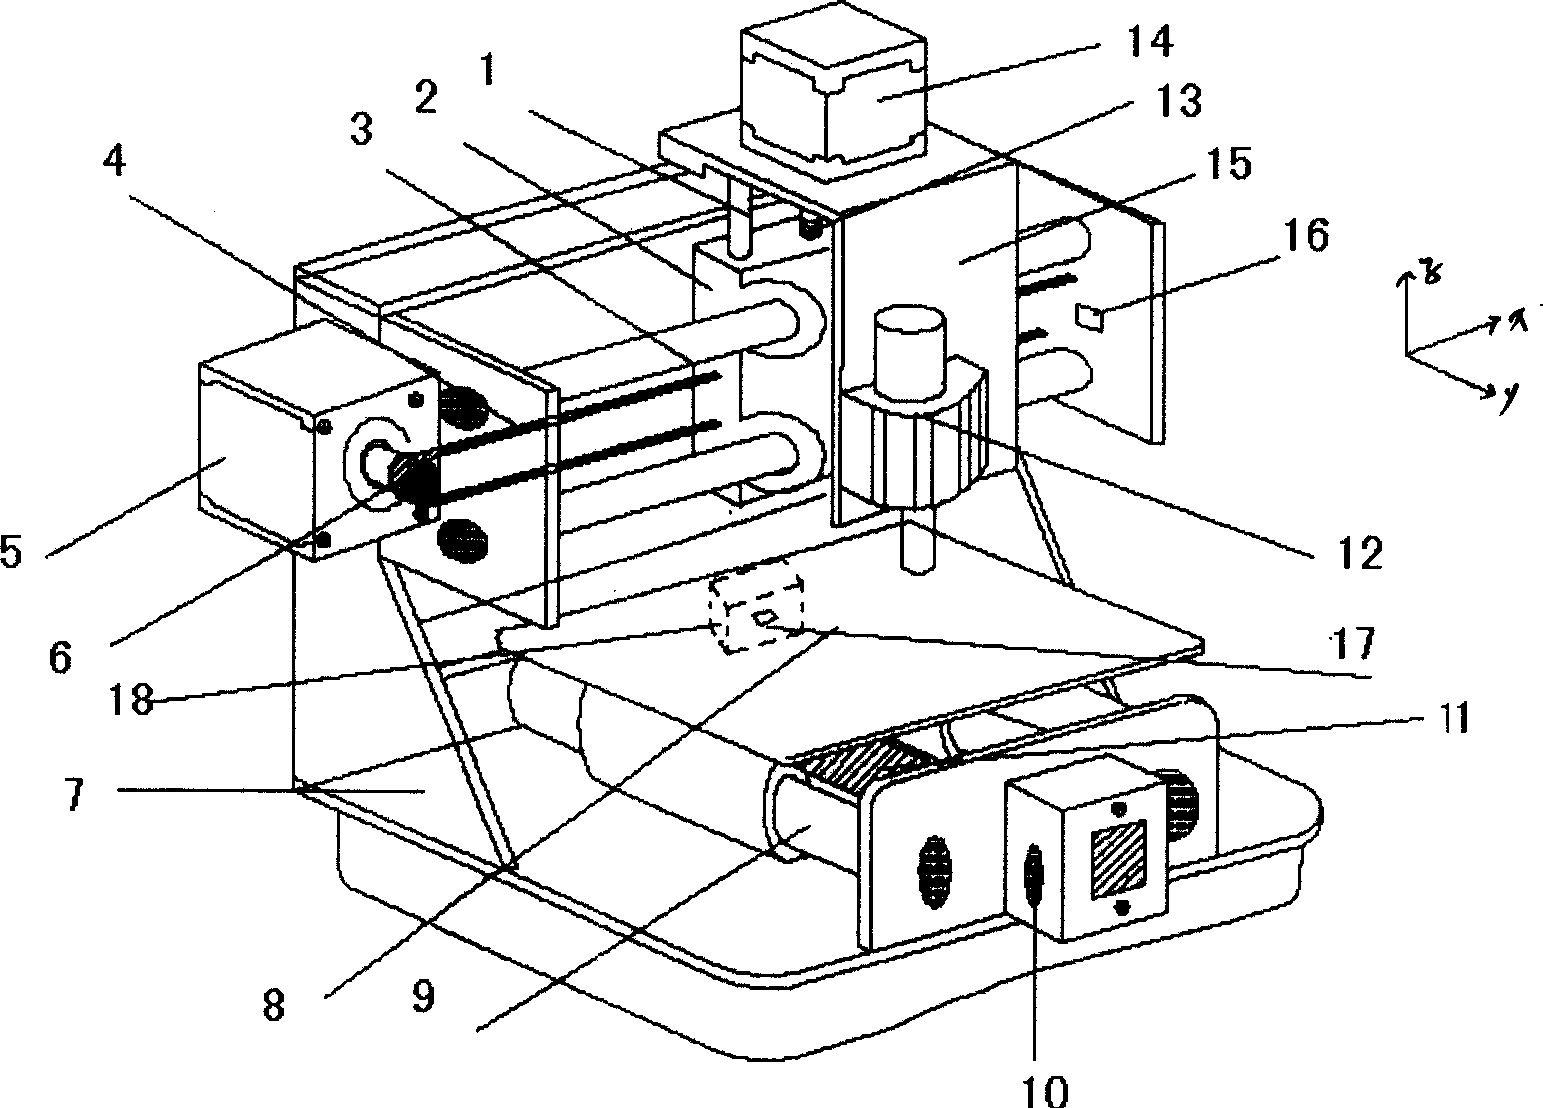 Circuit board automatic drilling machine